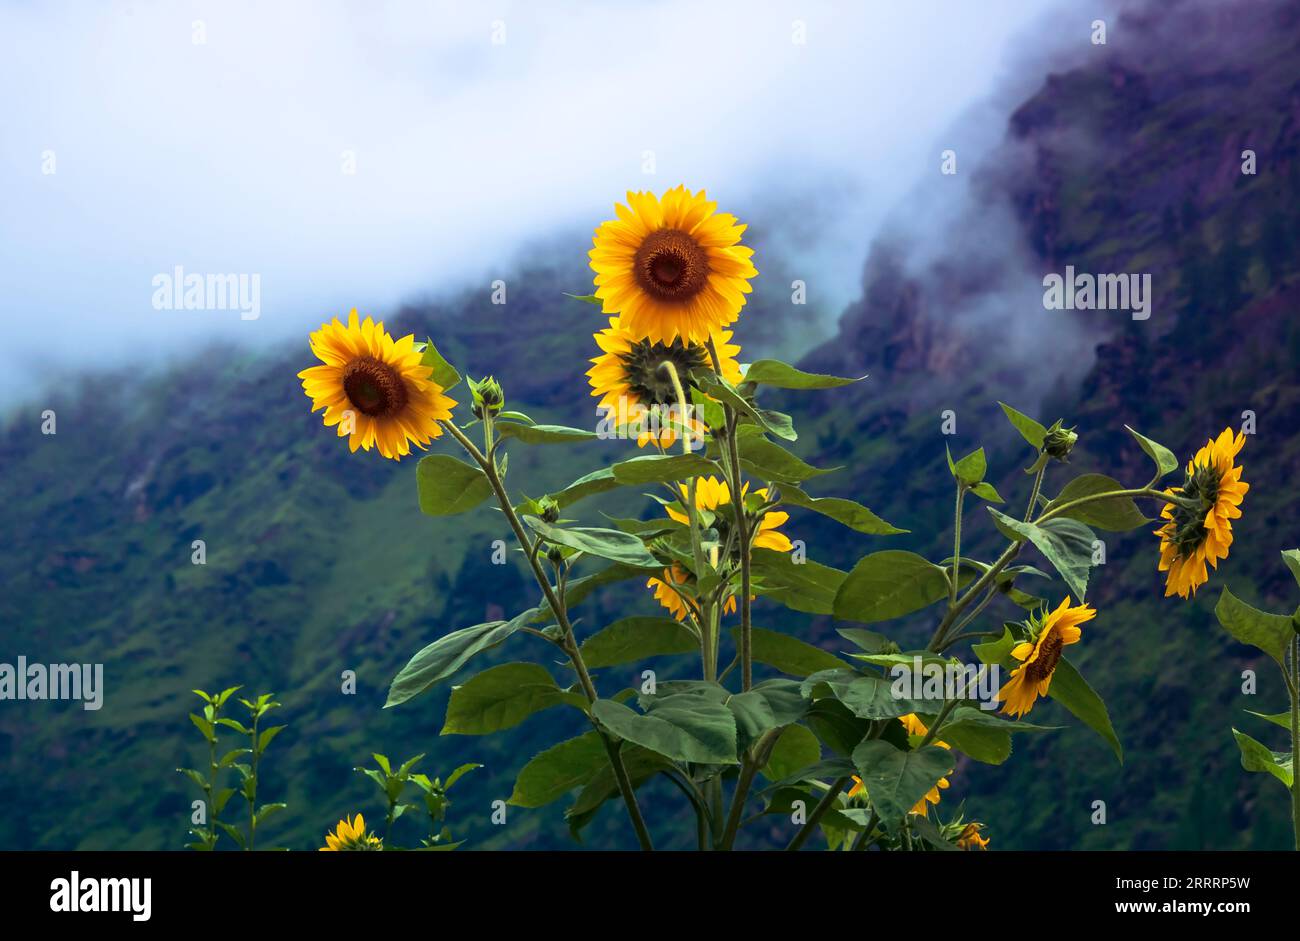 Sunflowers in the mountains. Sunflowers bloom in a Himalayan mountain garden near Joshimath Chamoli, the Indian state of Uttarakhand, India. Stock Photo